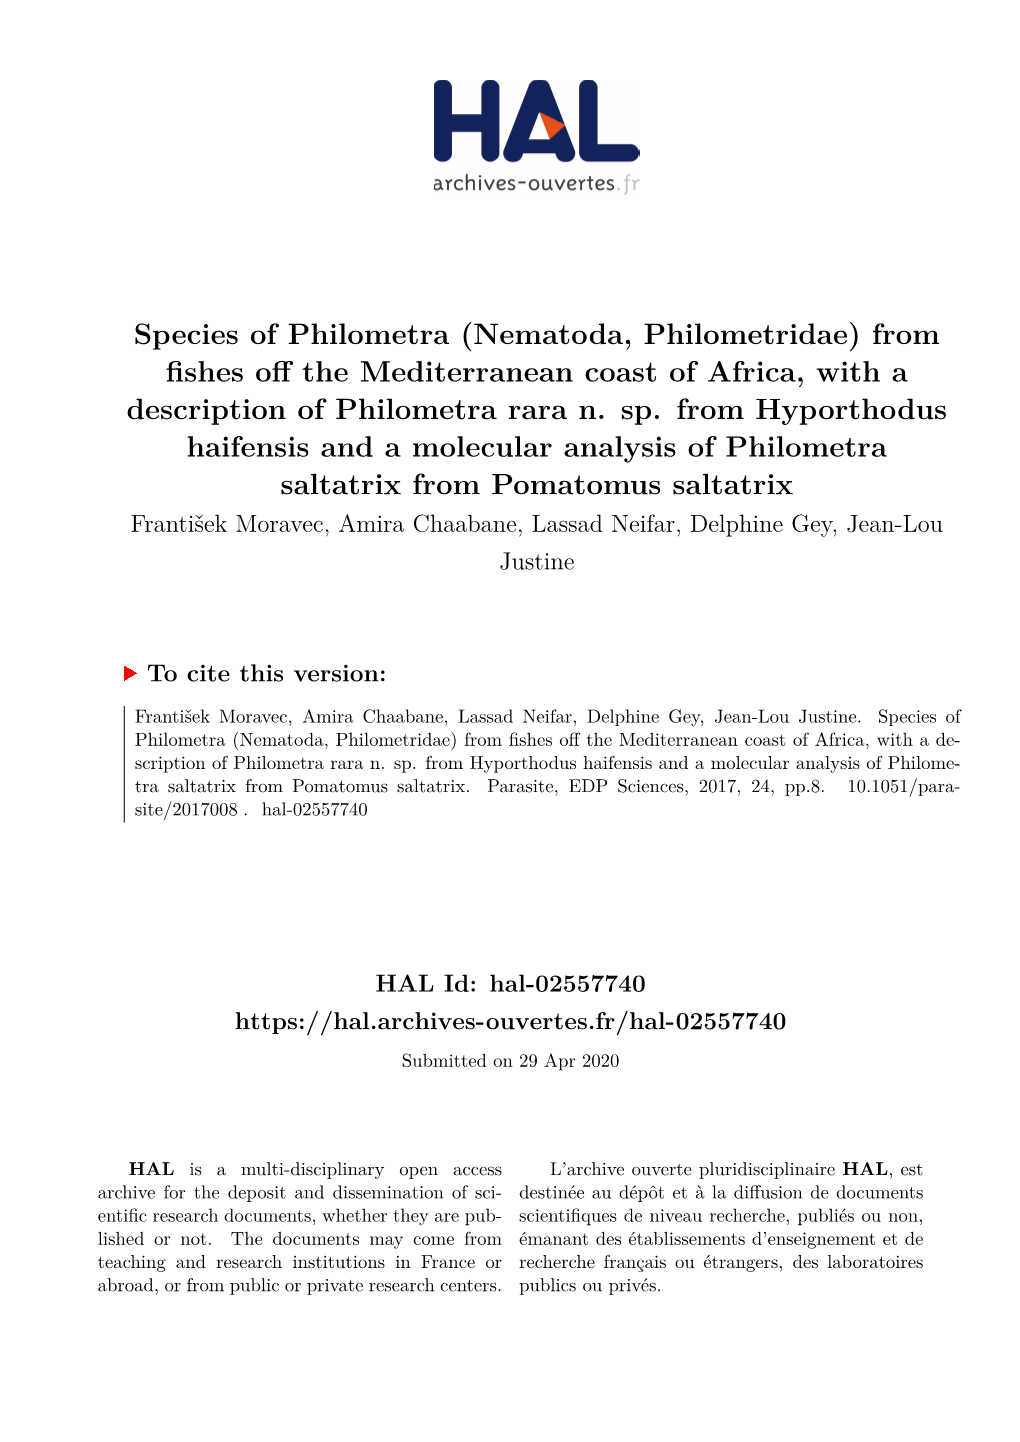 Species of Philometra (Nematoda, Philometridae) from Fishes Off the Mediterranean Coast of Africa, Witha Description of Philometra Rara N